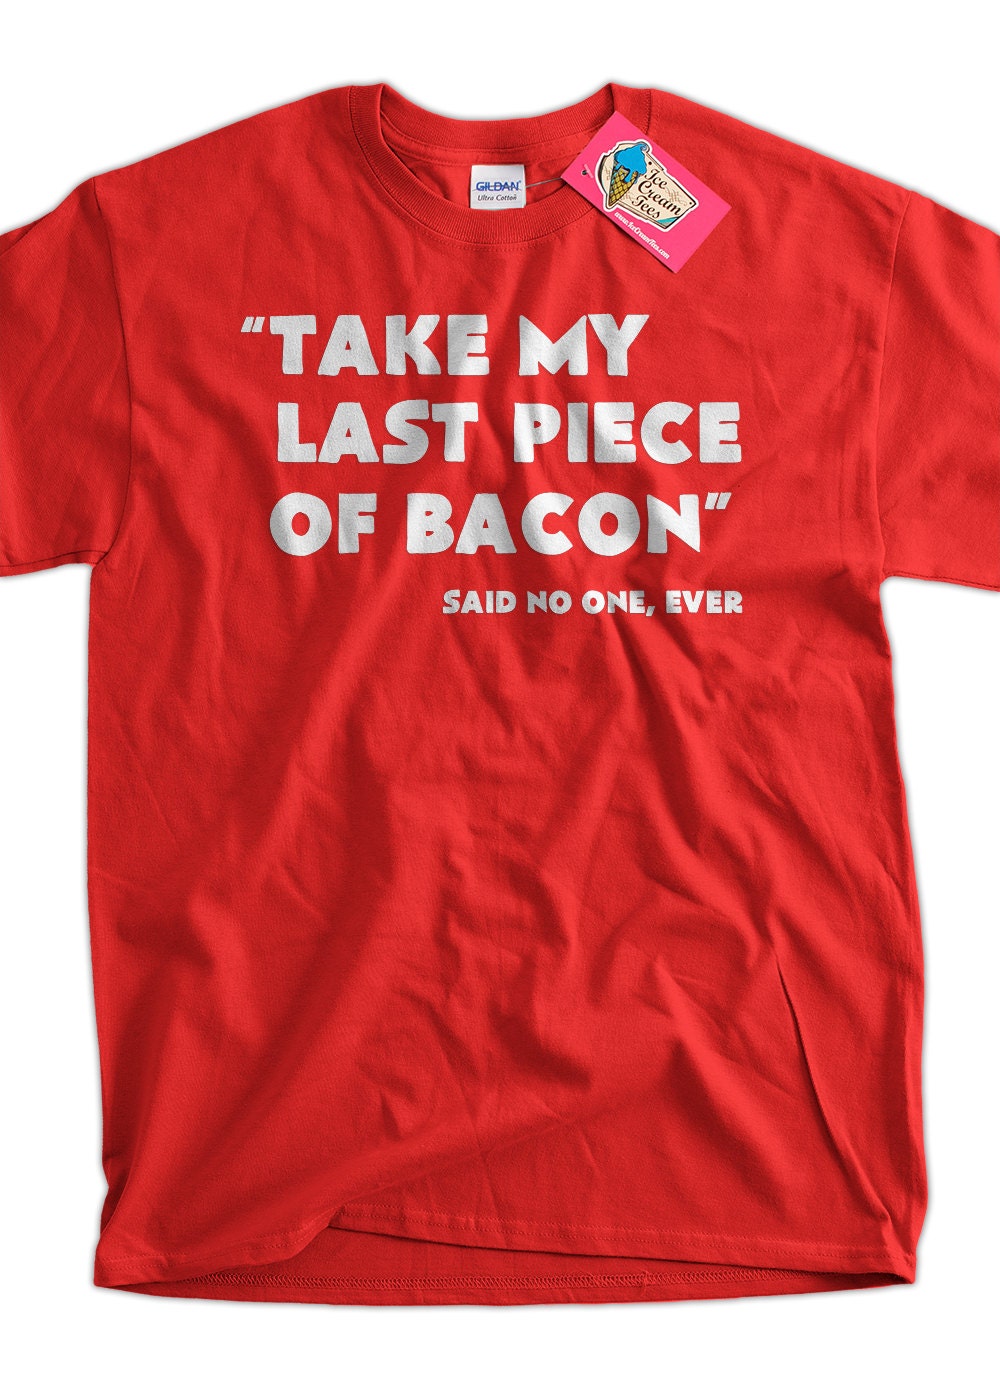 bacon t shirts funny